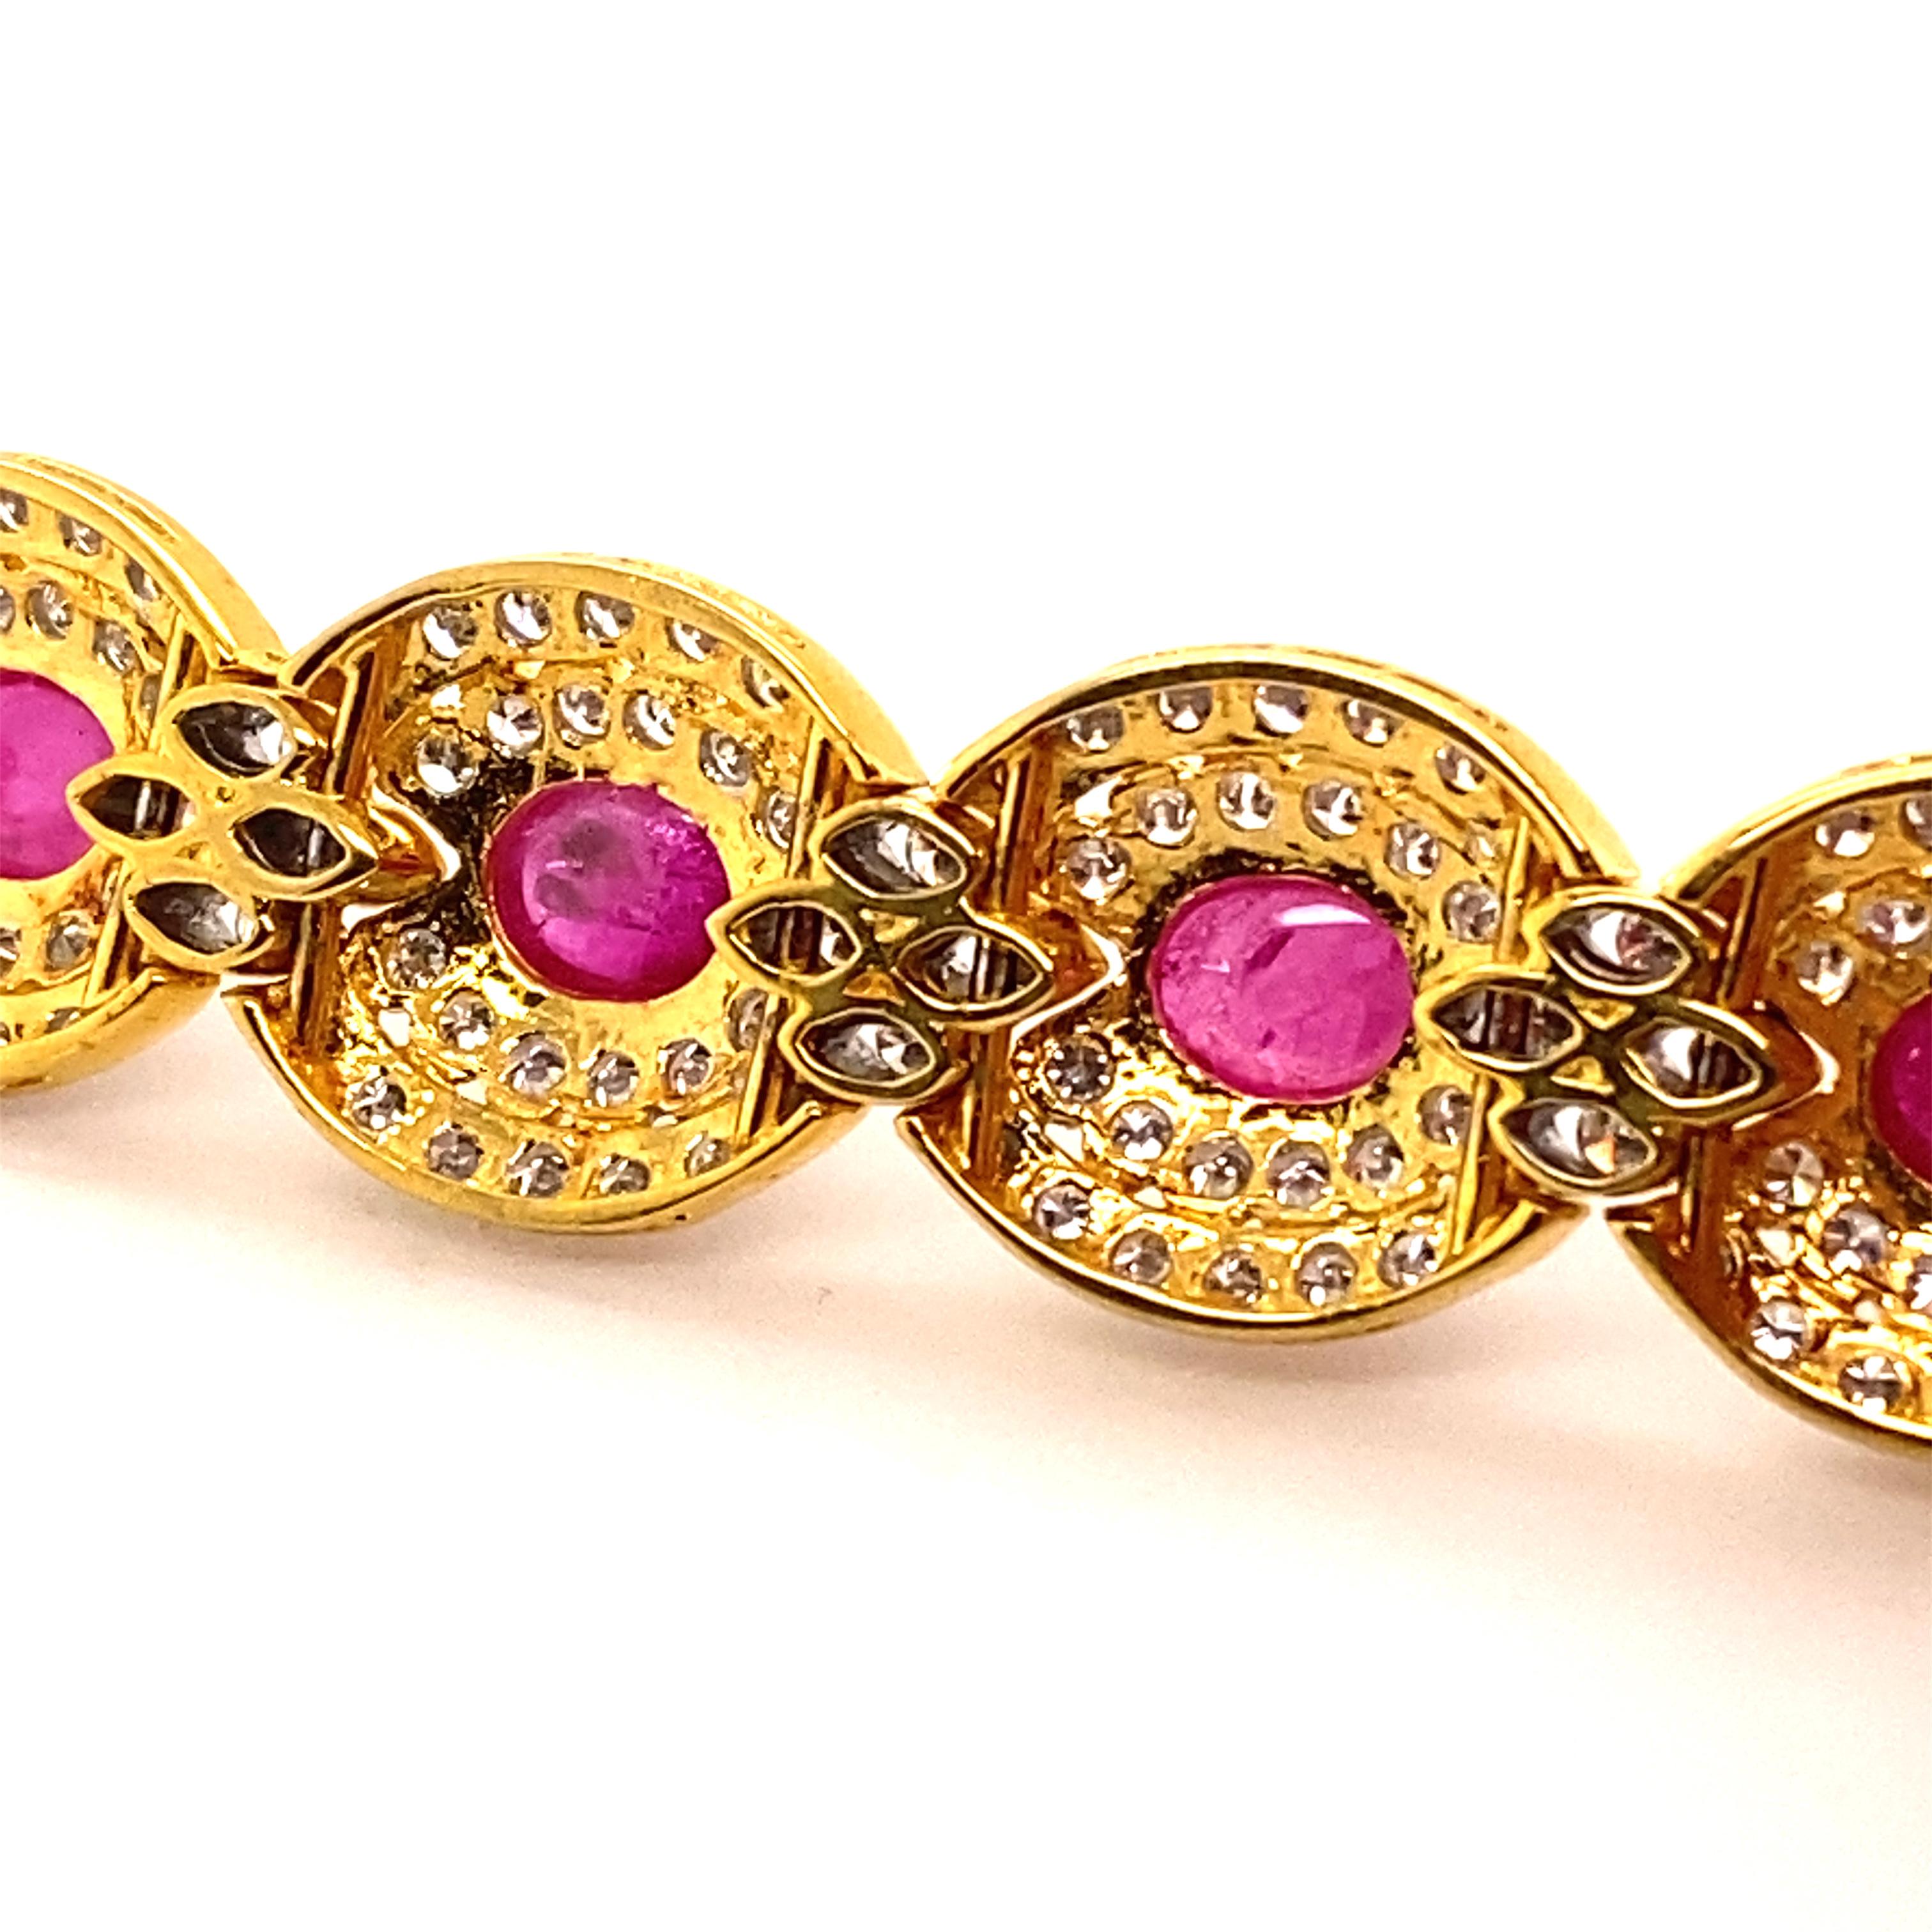 Splendid Ruby and Diamond Bracelet in 18 Karat Yellow Gold 5